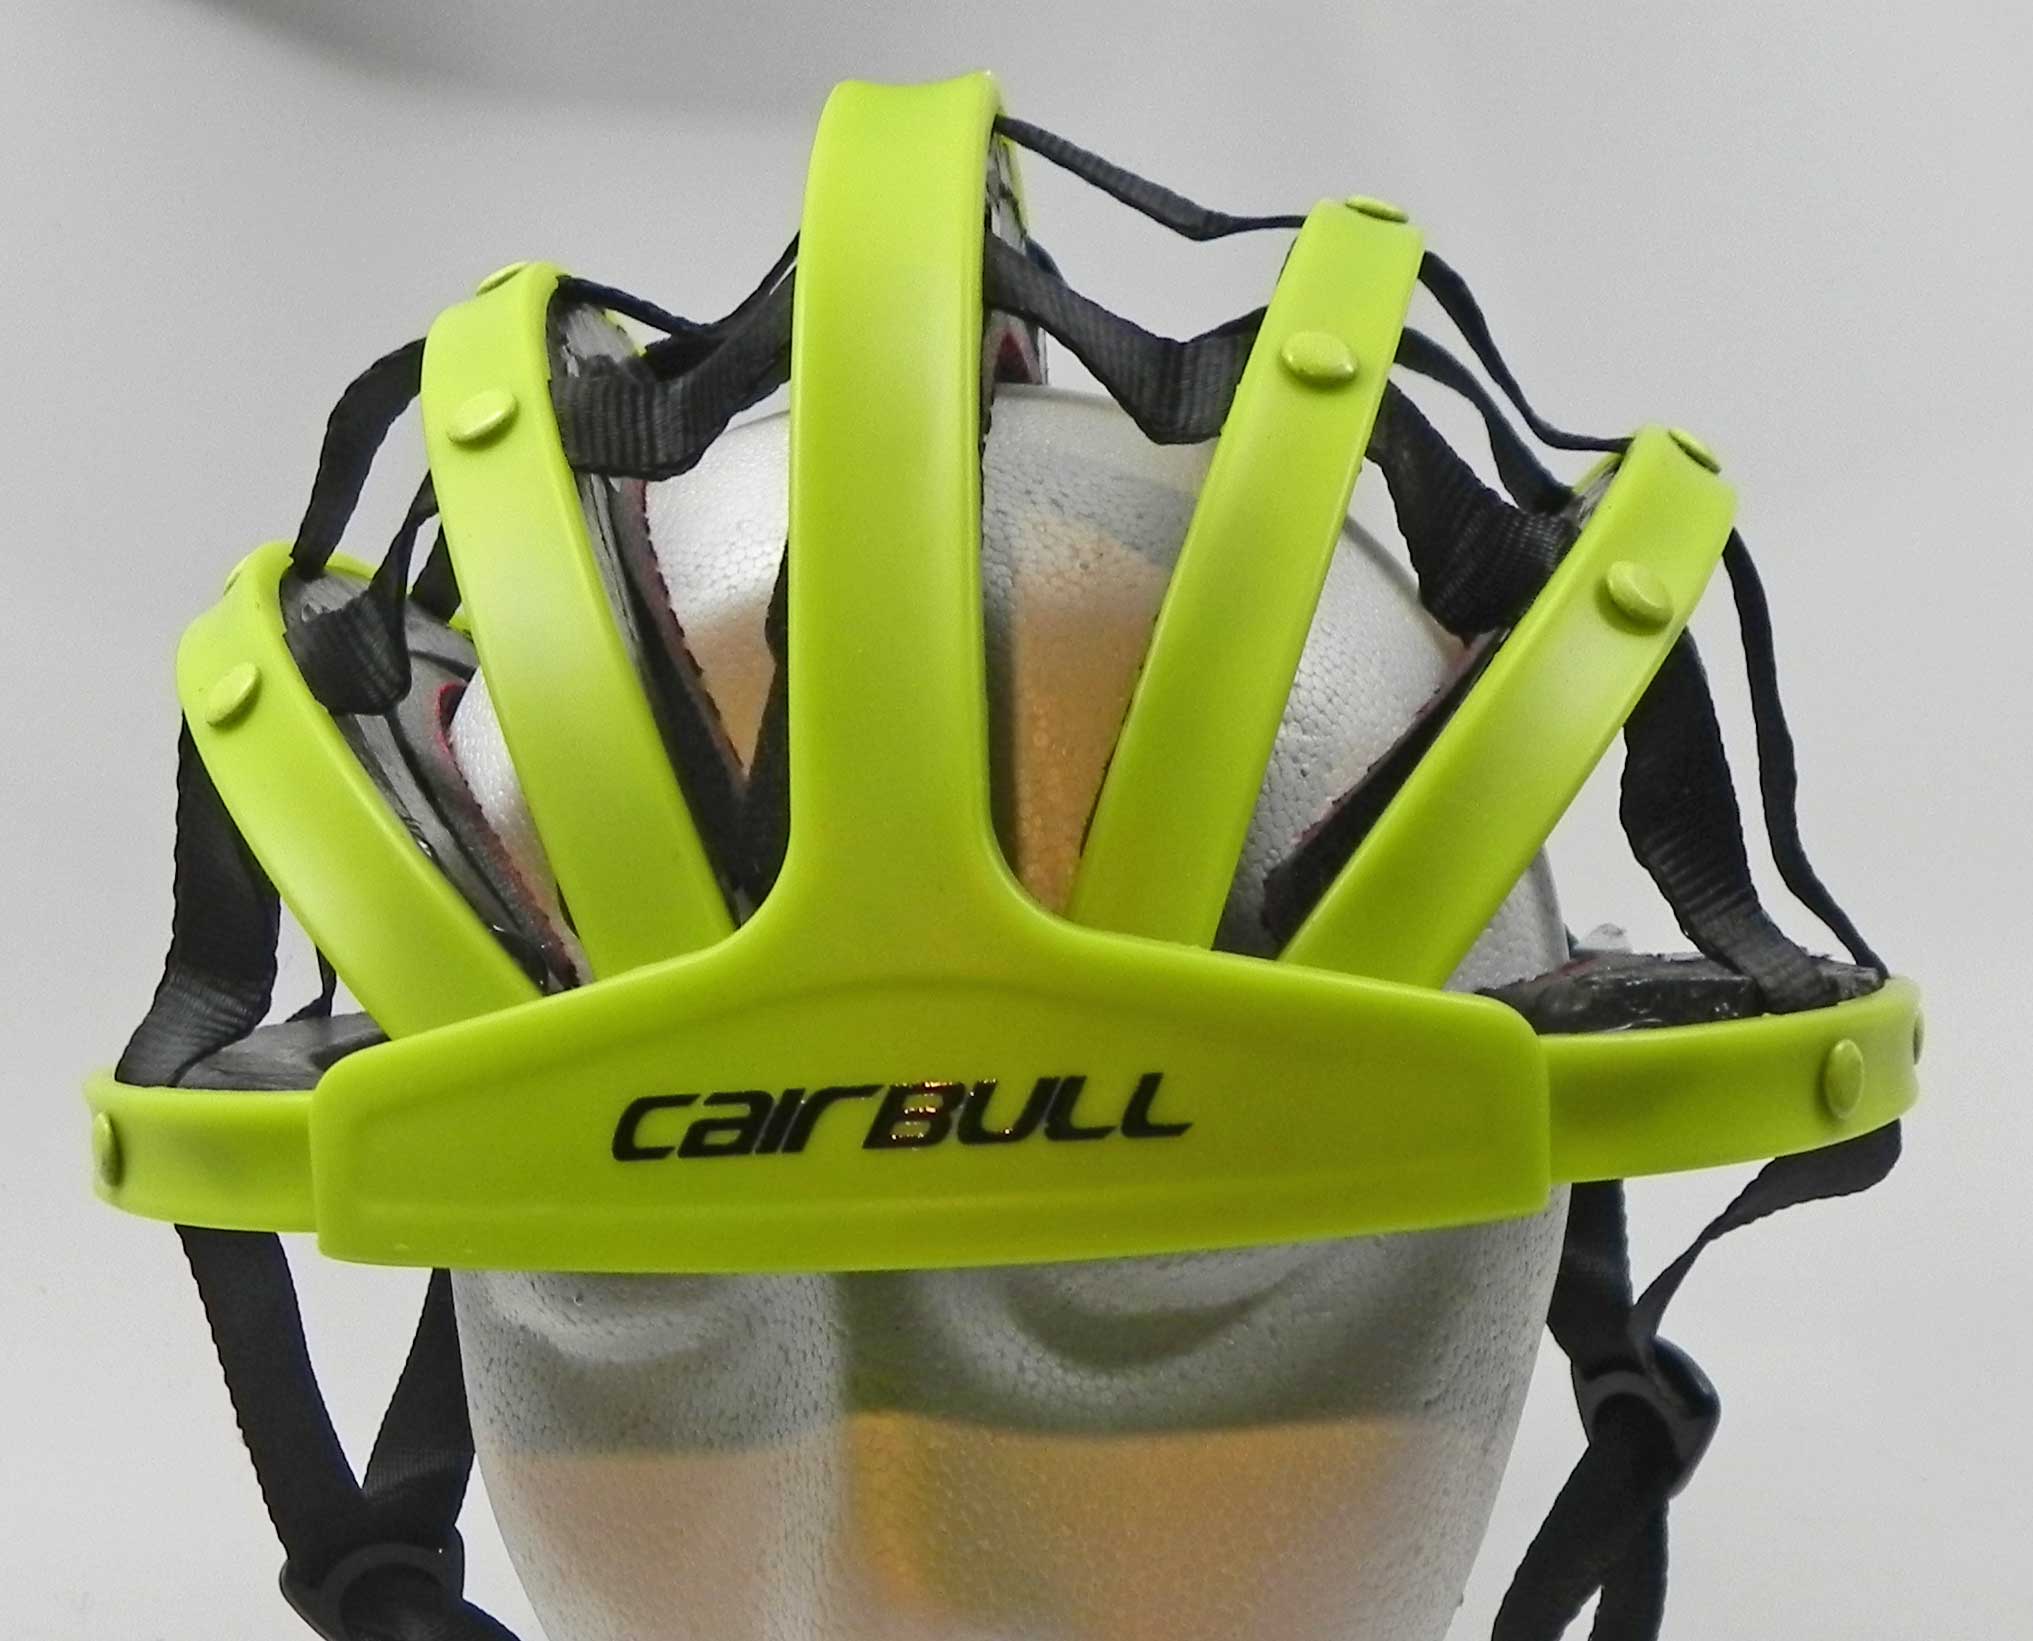 Cairbull helmet image